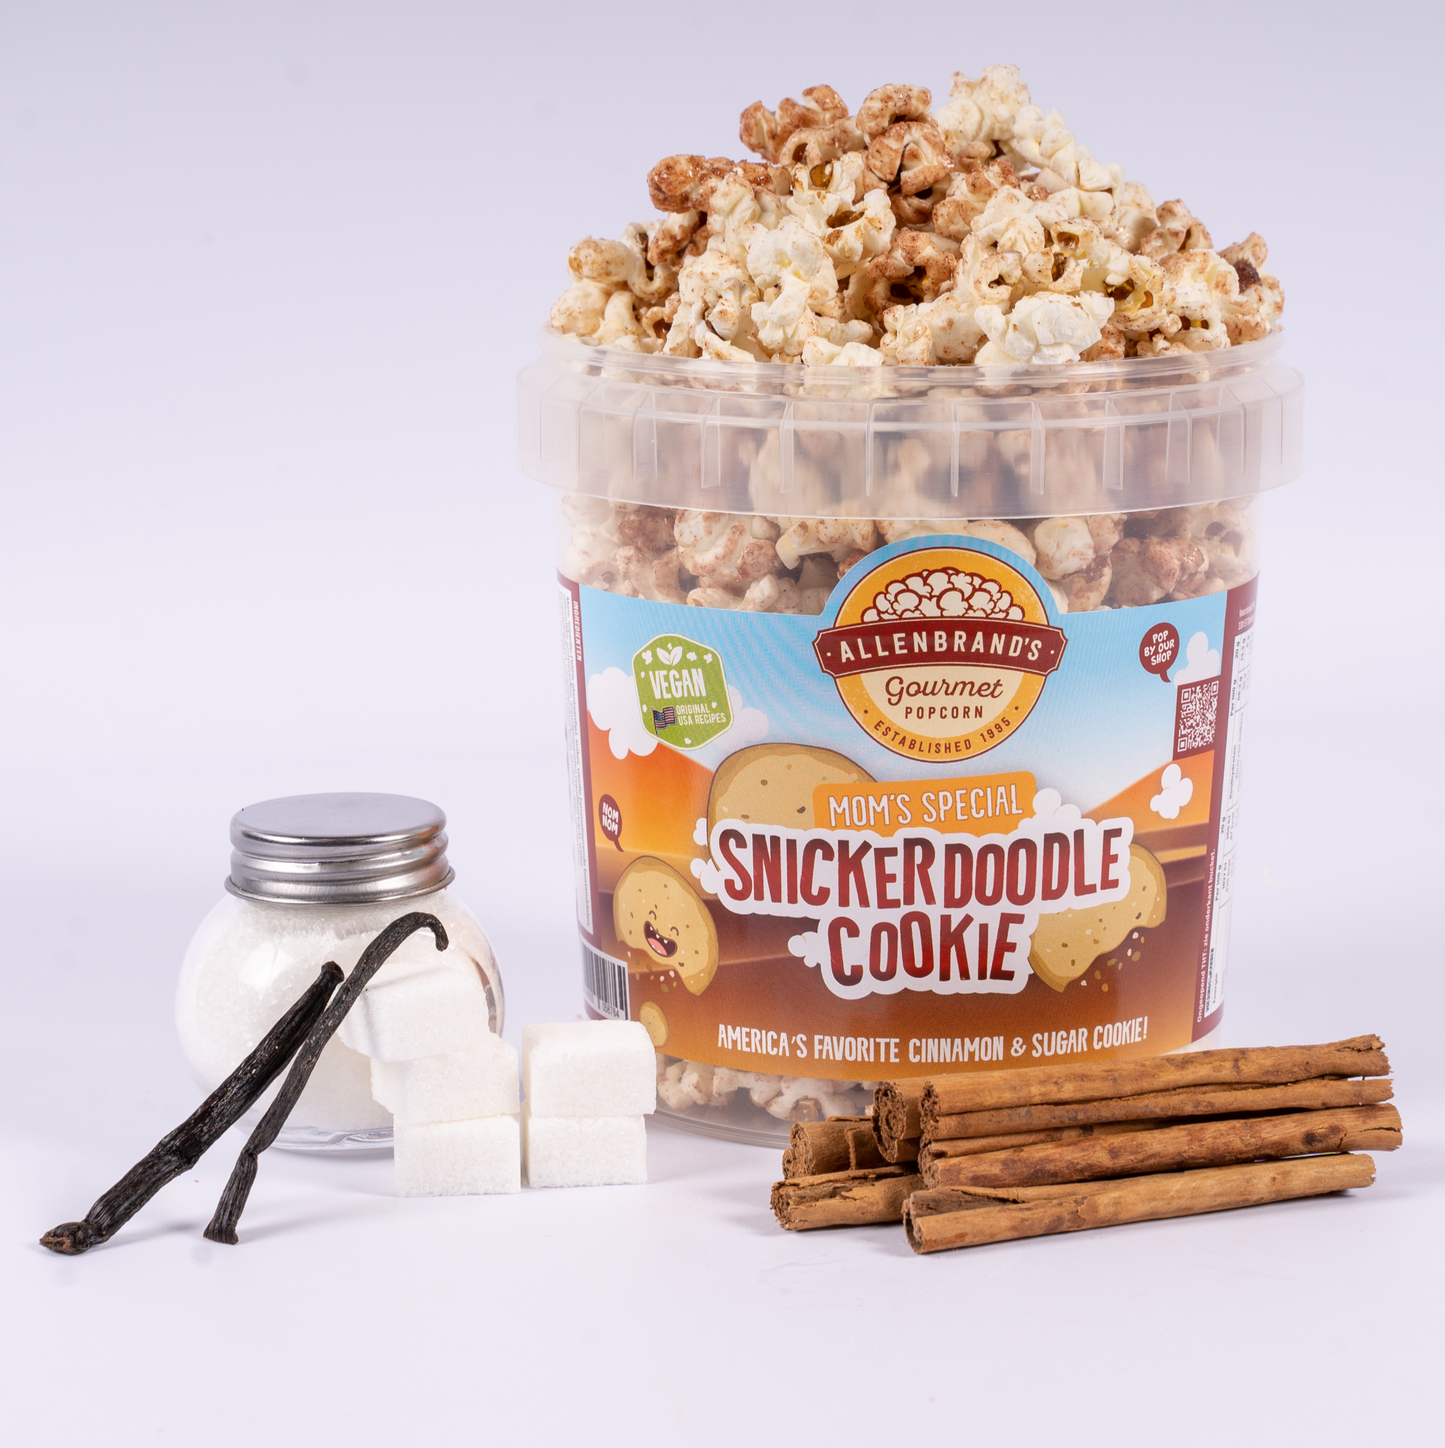 Snickerdoodle Cookie: America's favorite cinnamon and sugar cookie.